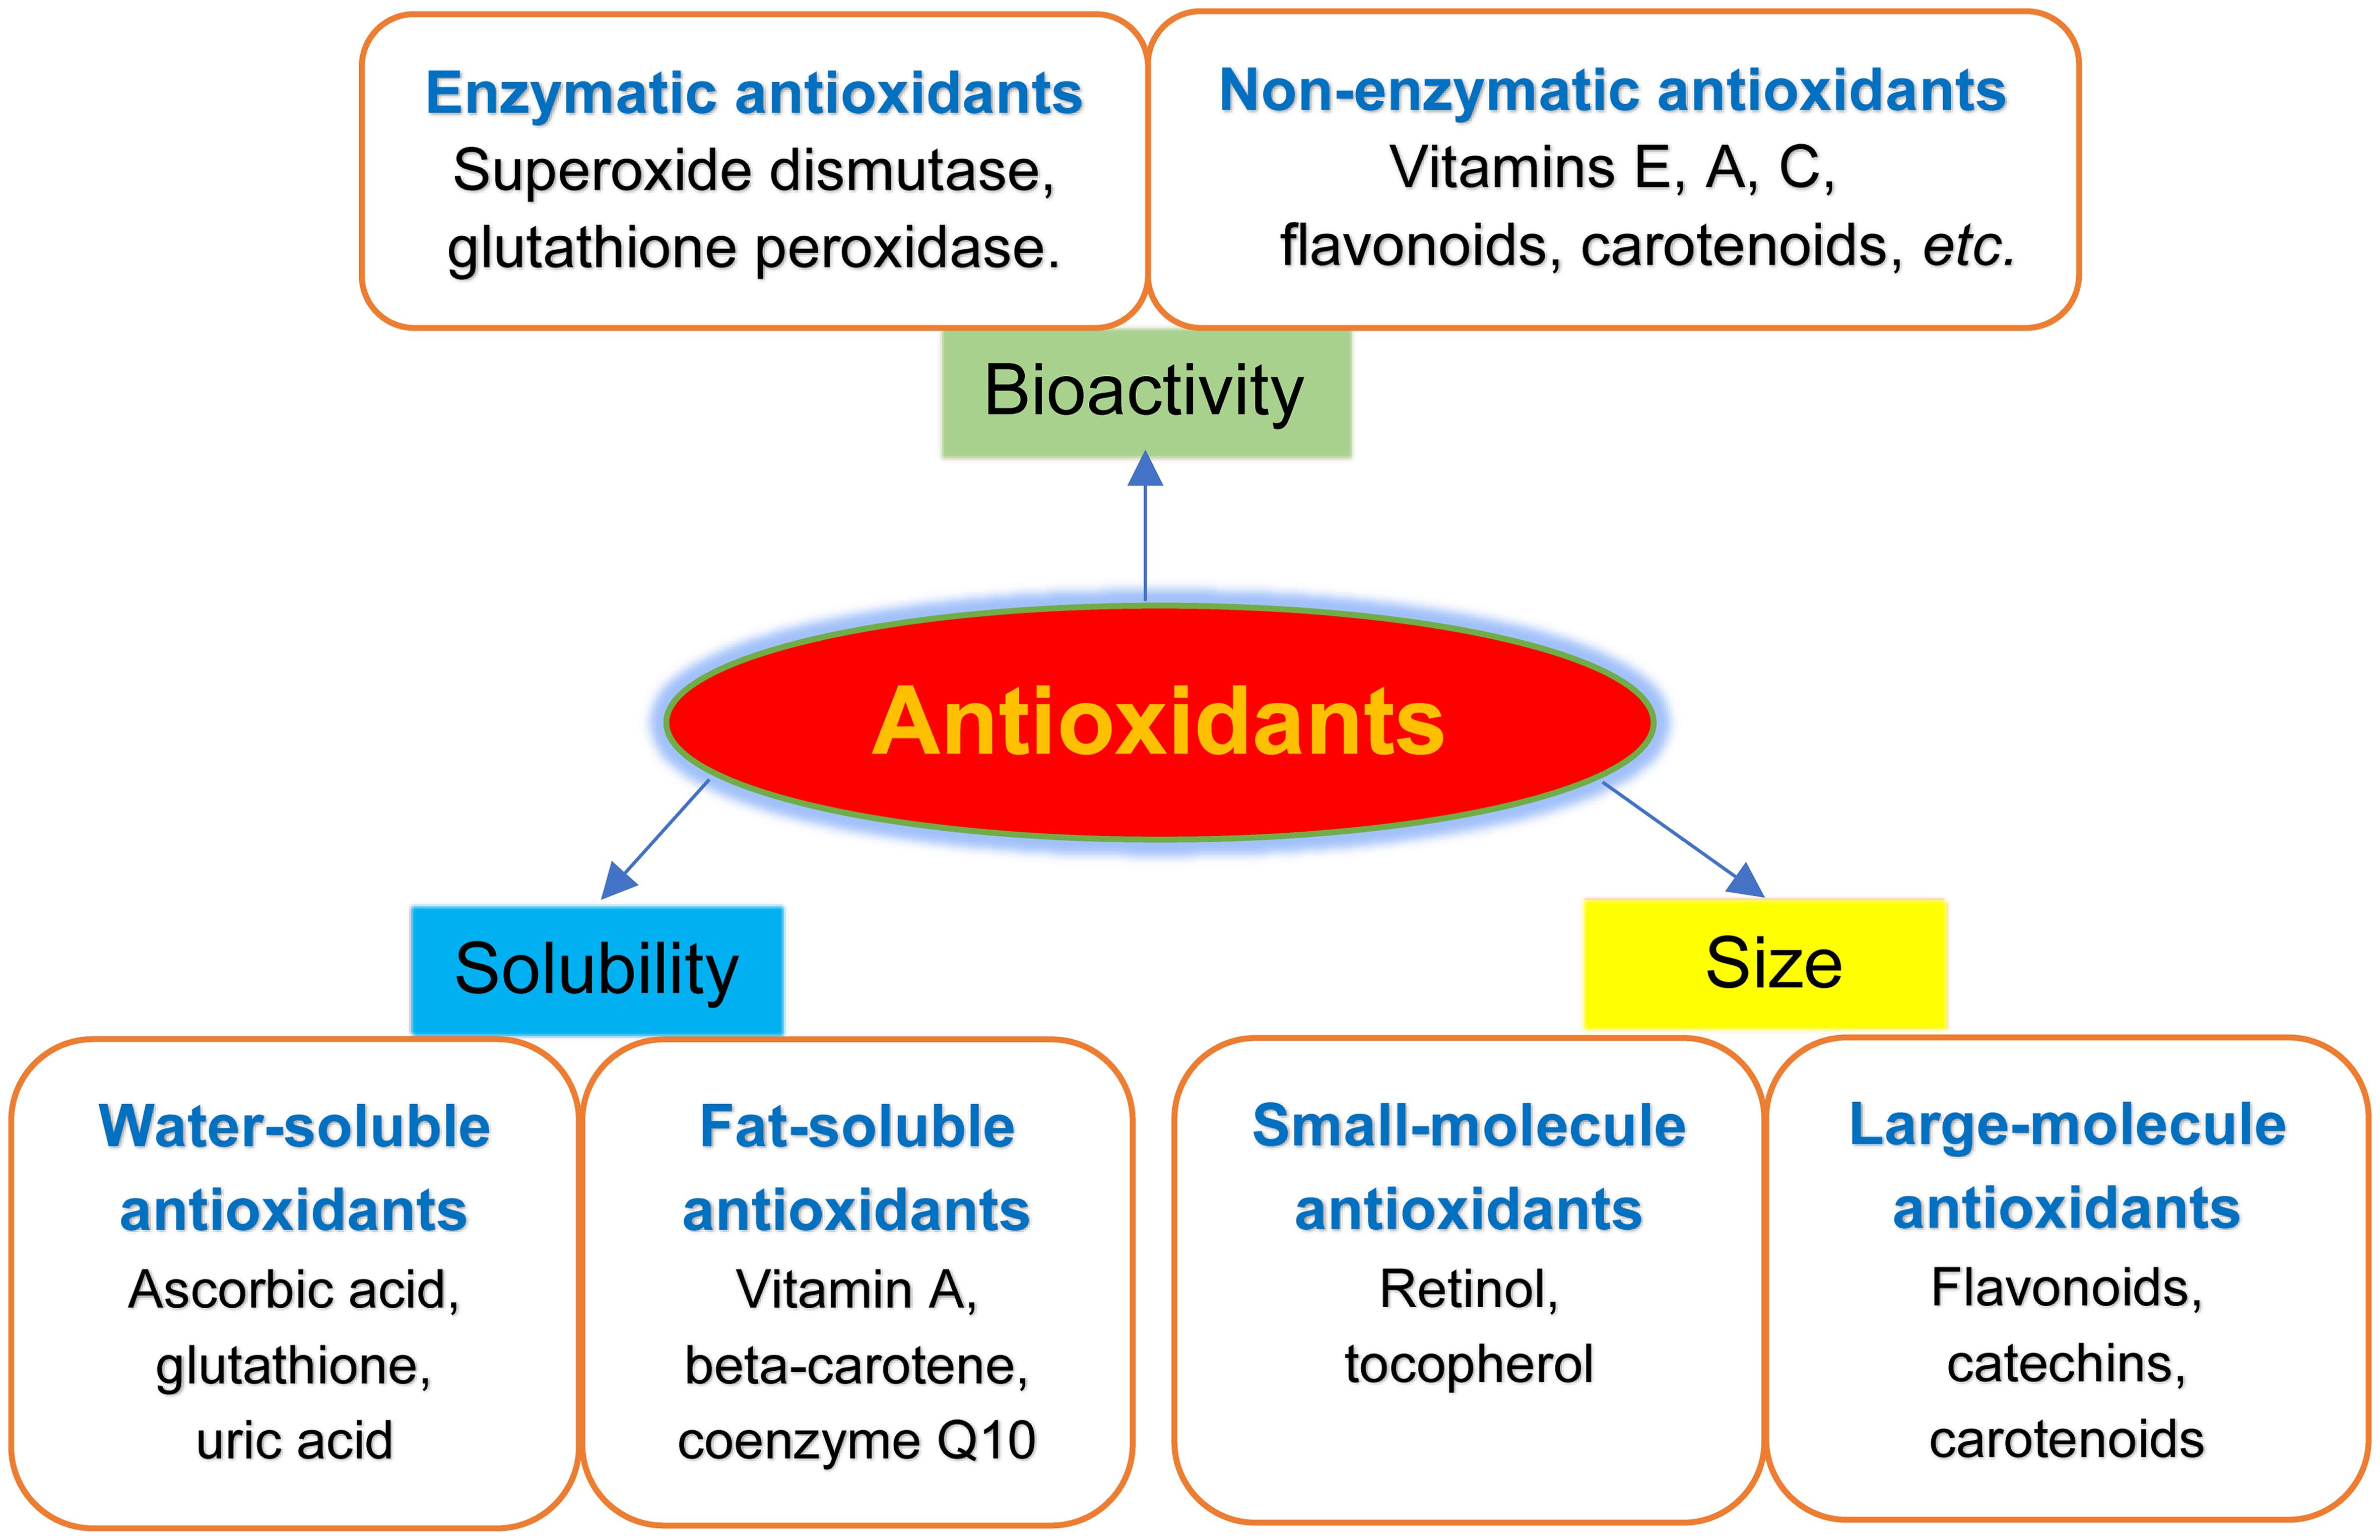 Different classes of antioxidants.